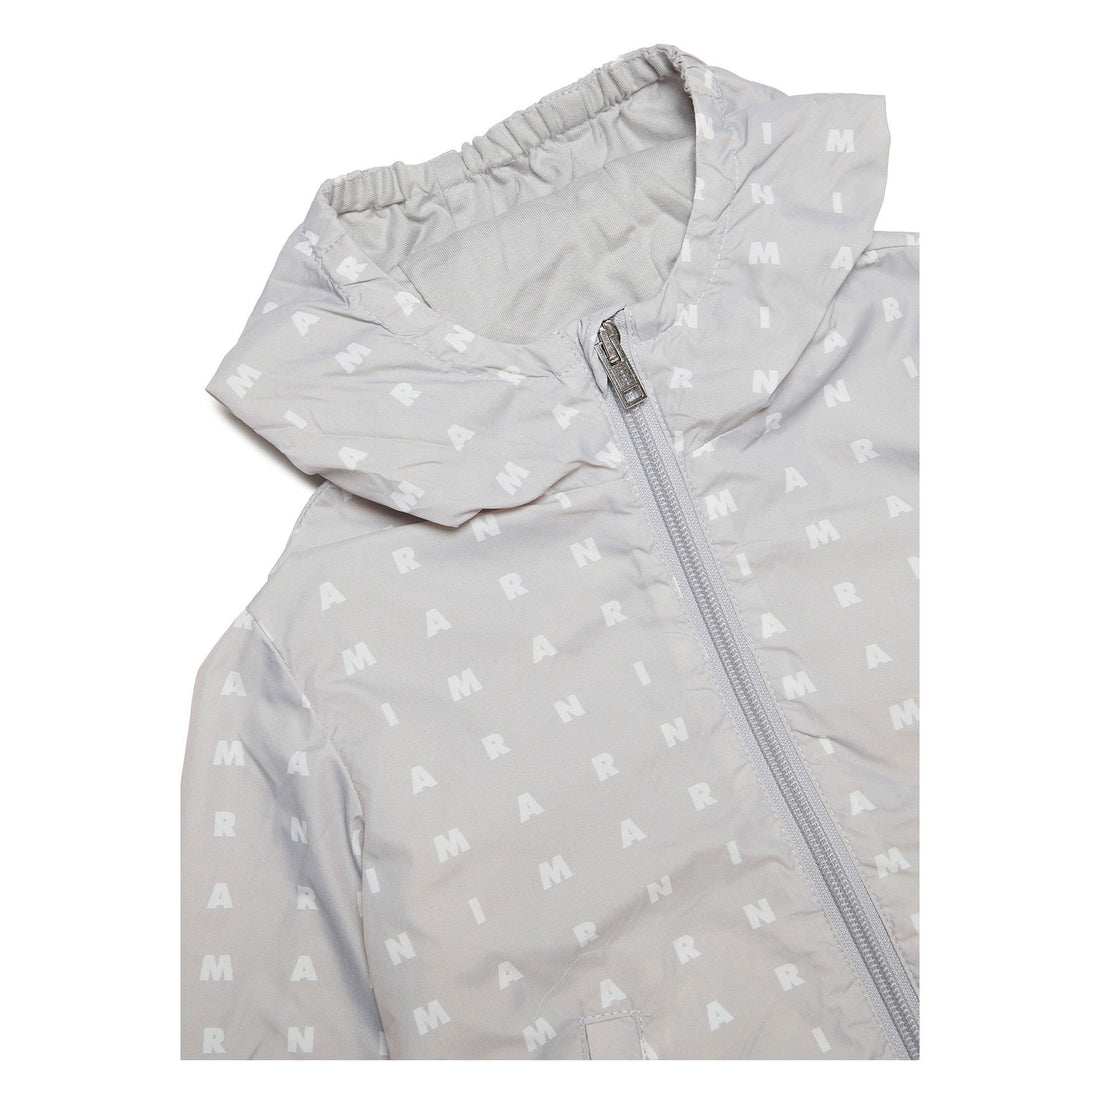 Marni Light Grey Baby Jacket